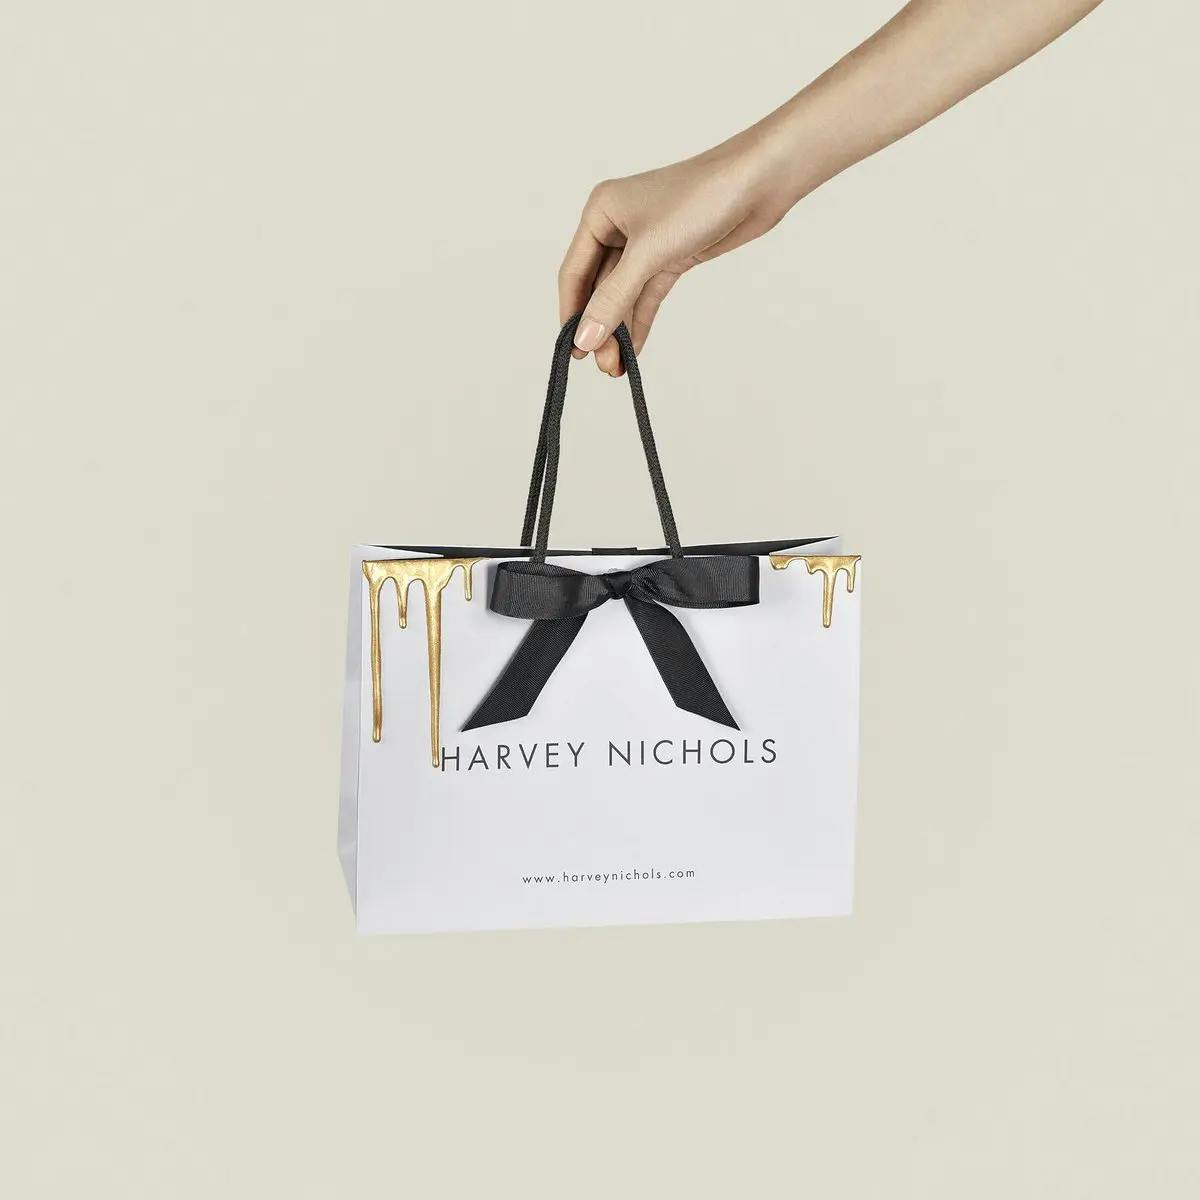 Harvey Nichols bag filled with gold